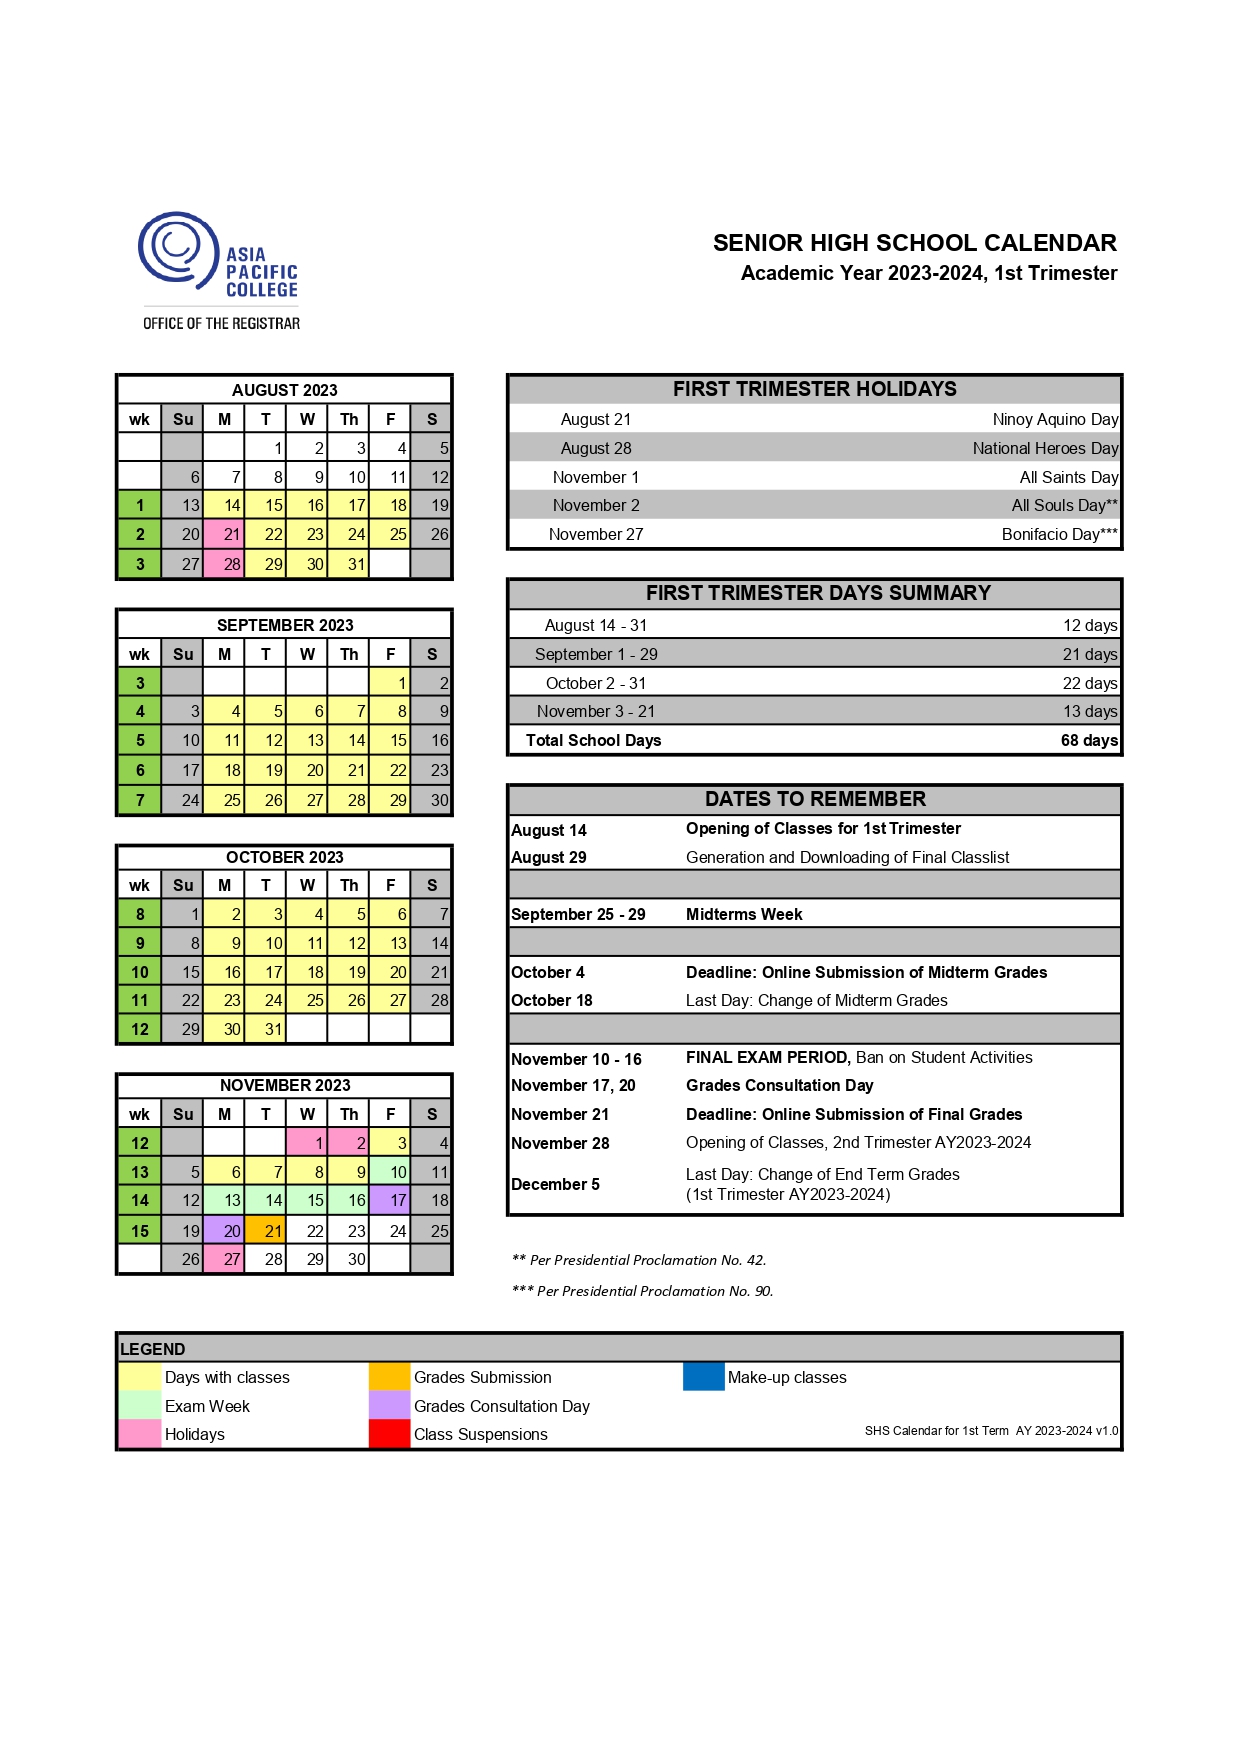 Term 1 Calendar (AY2023-24) - Senior High School v1.0_page-0001